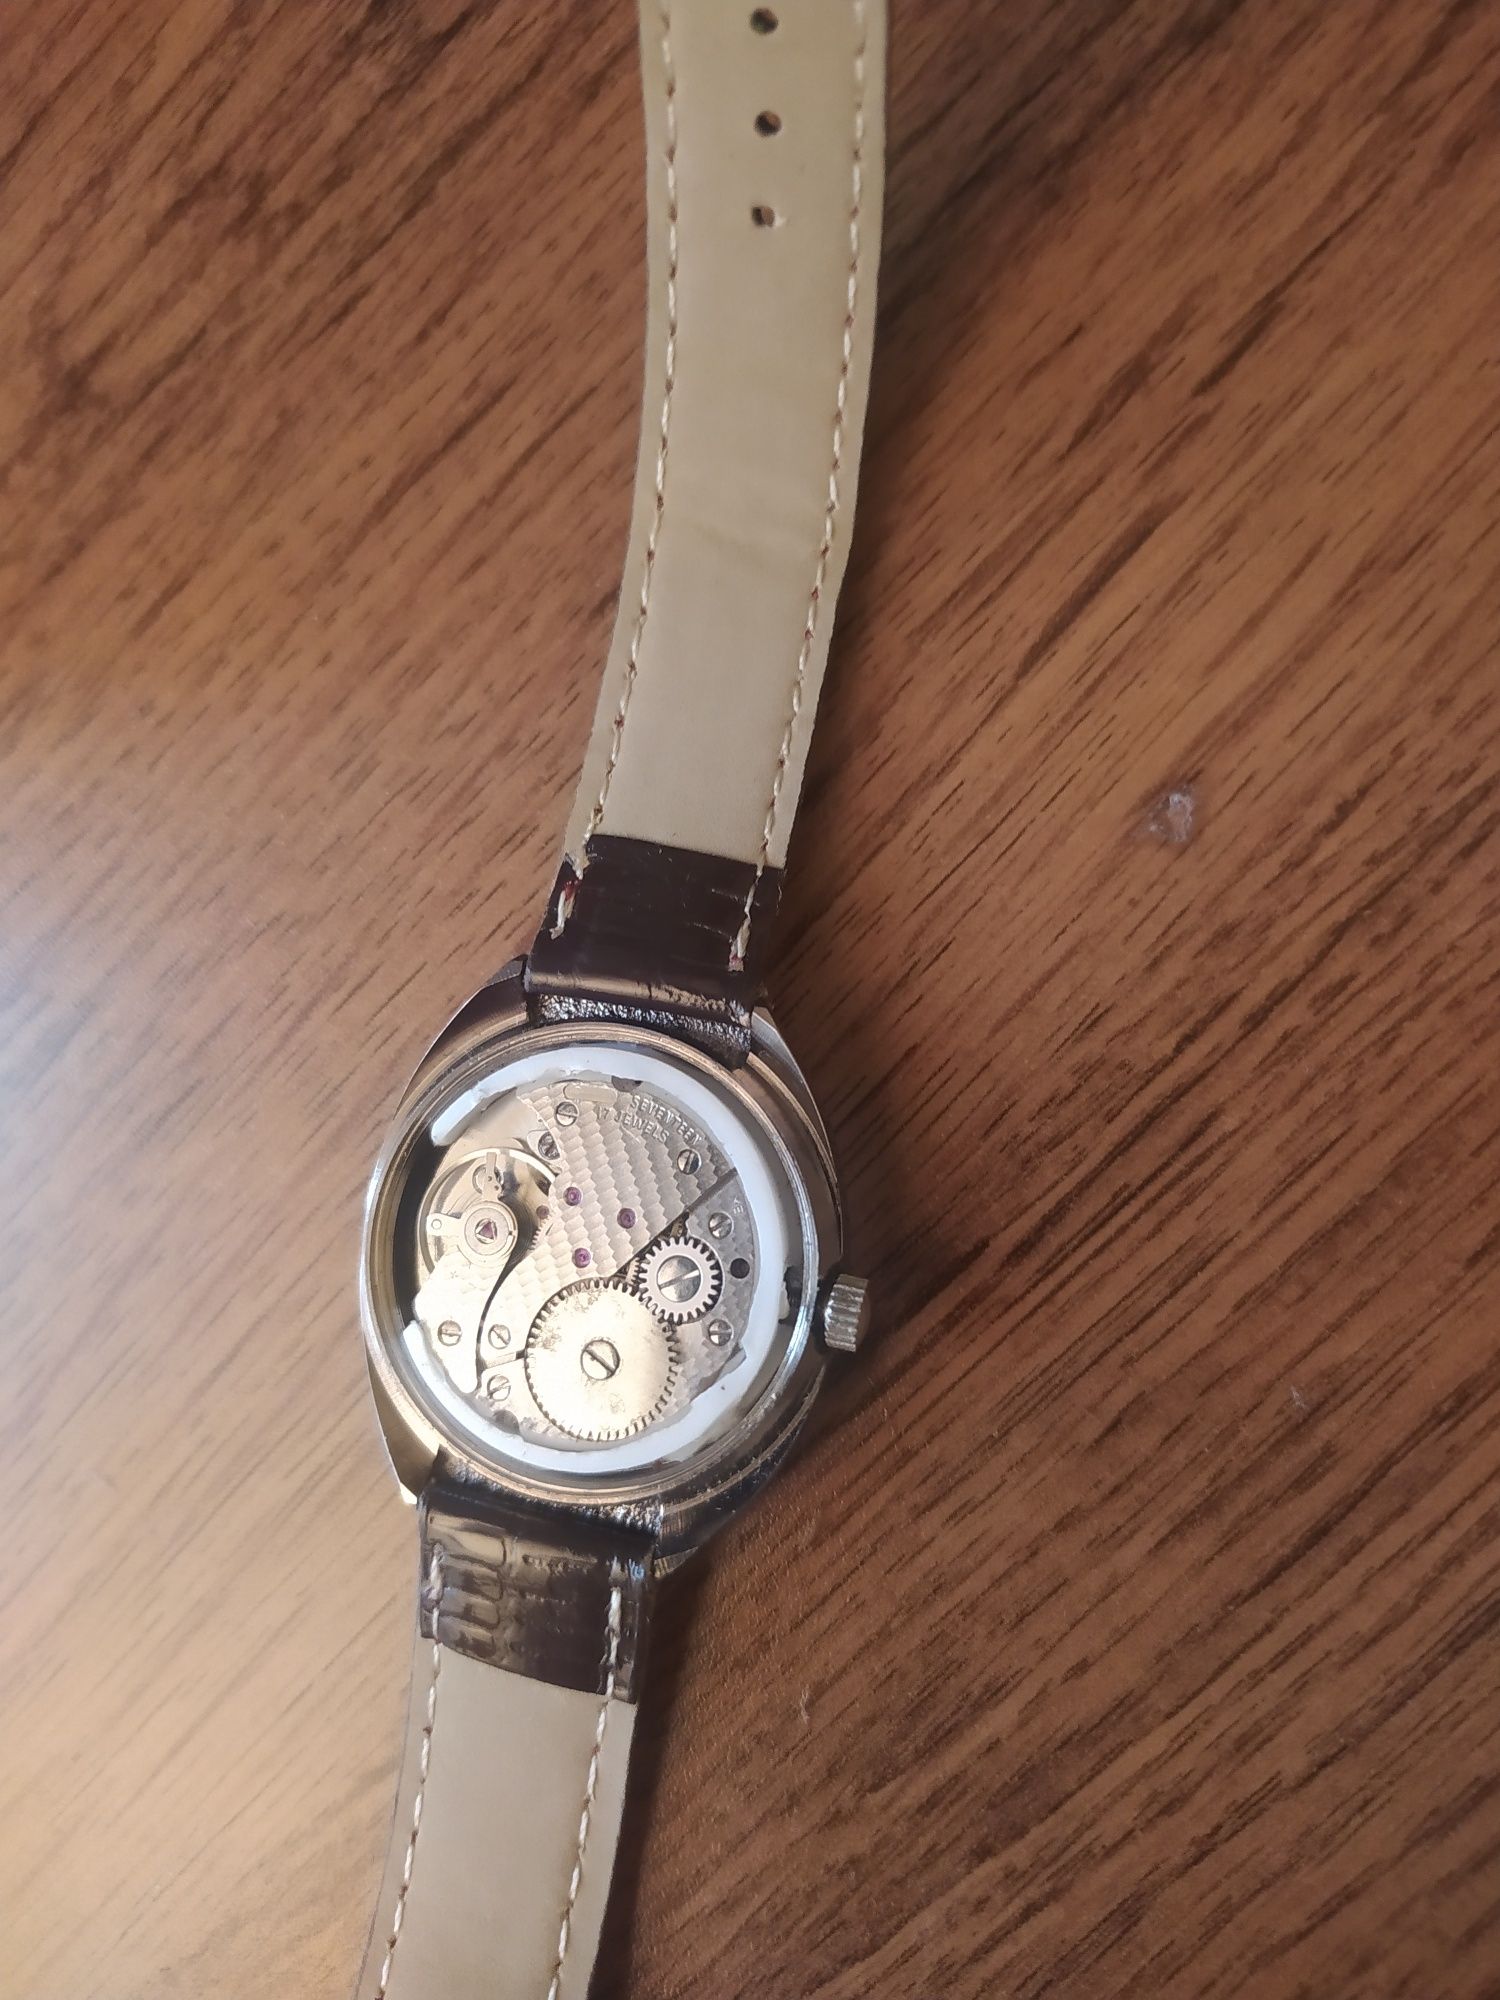 Męski zegarek szwajcarski, marki Lanco.